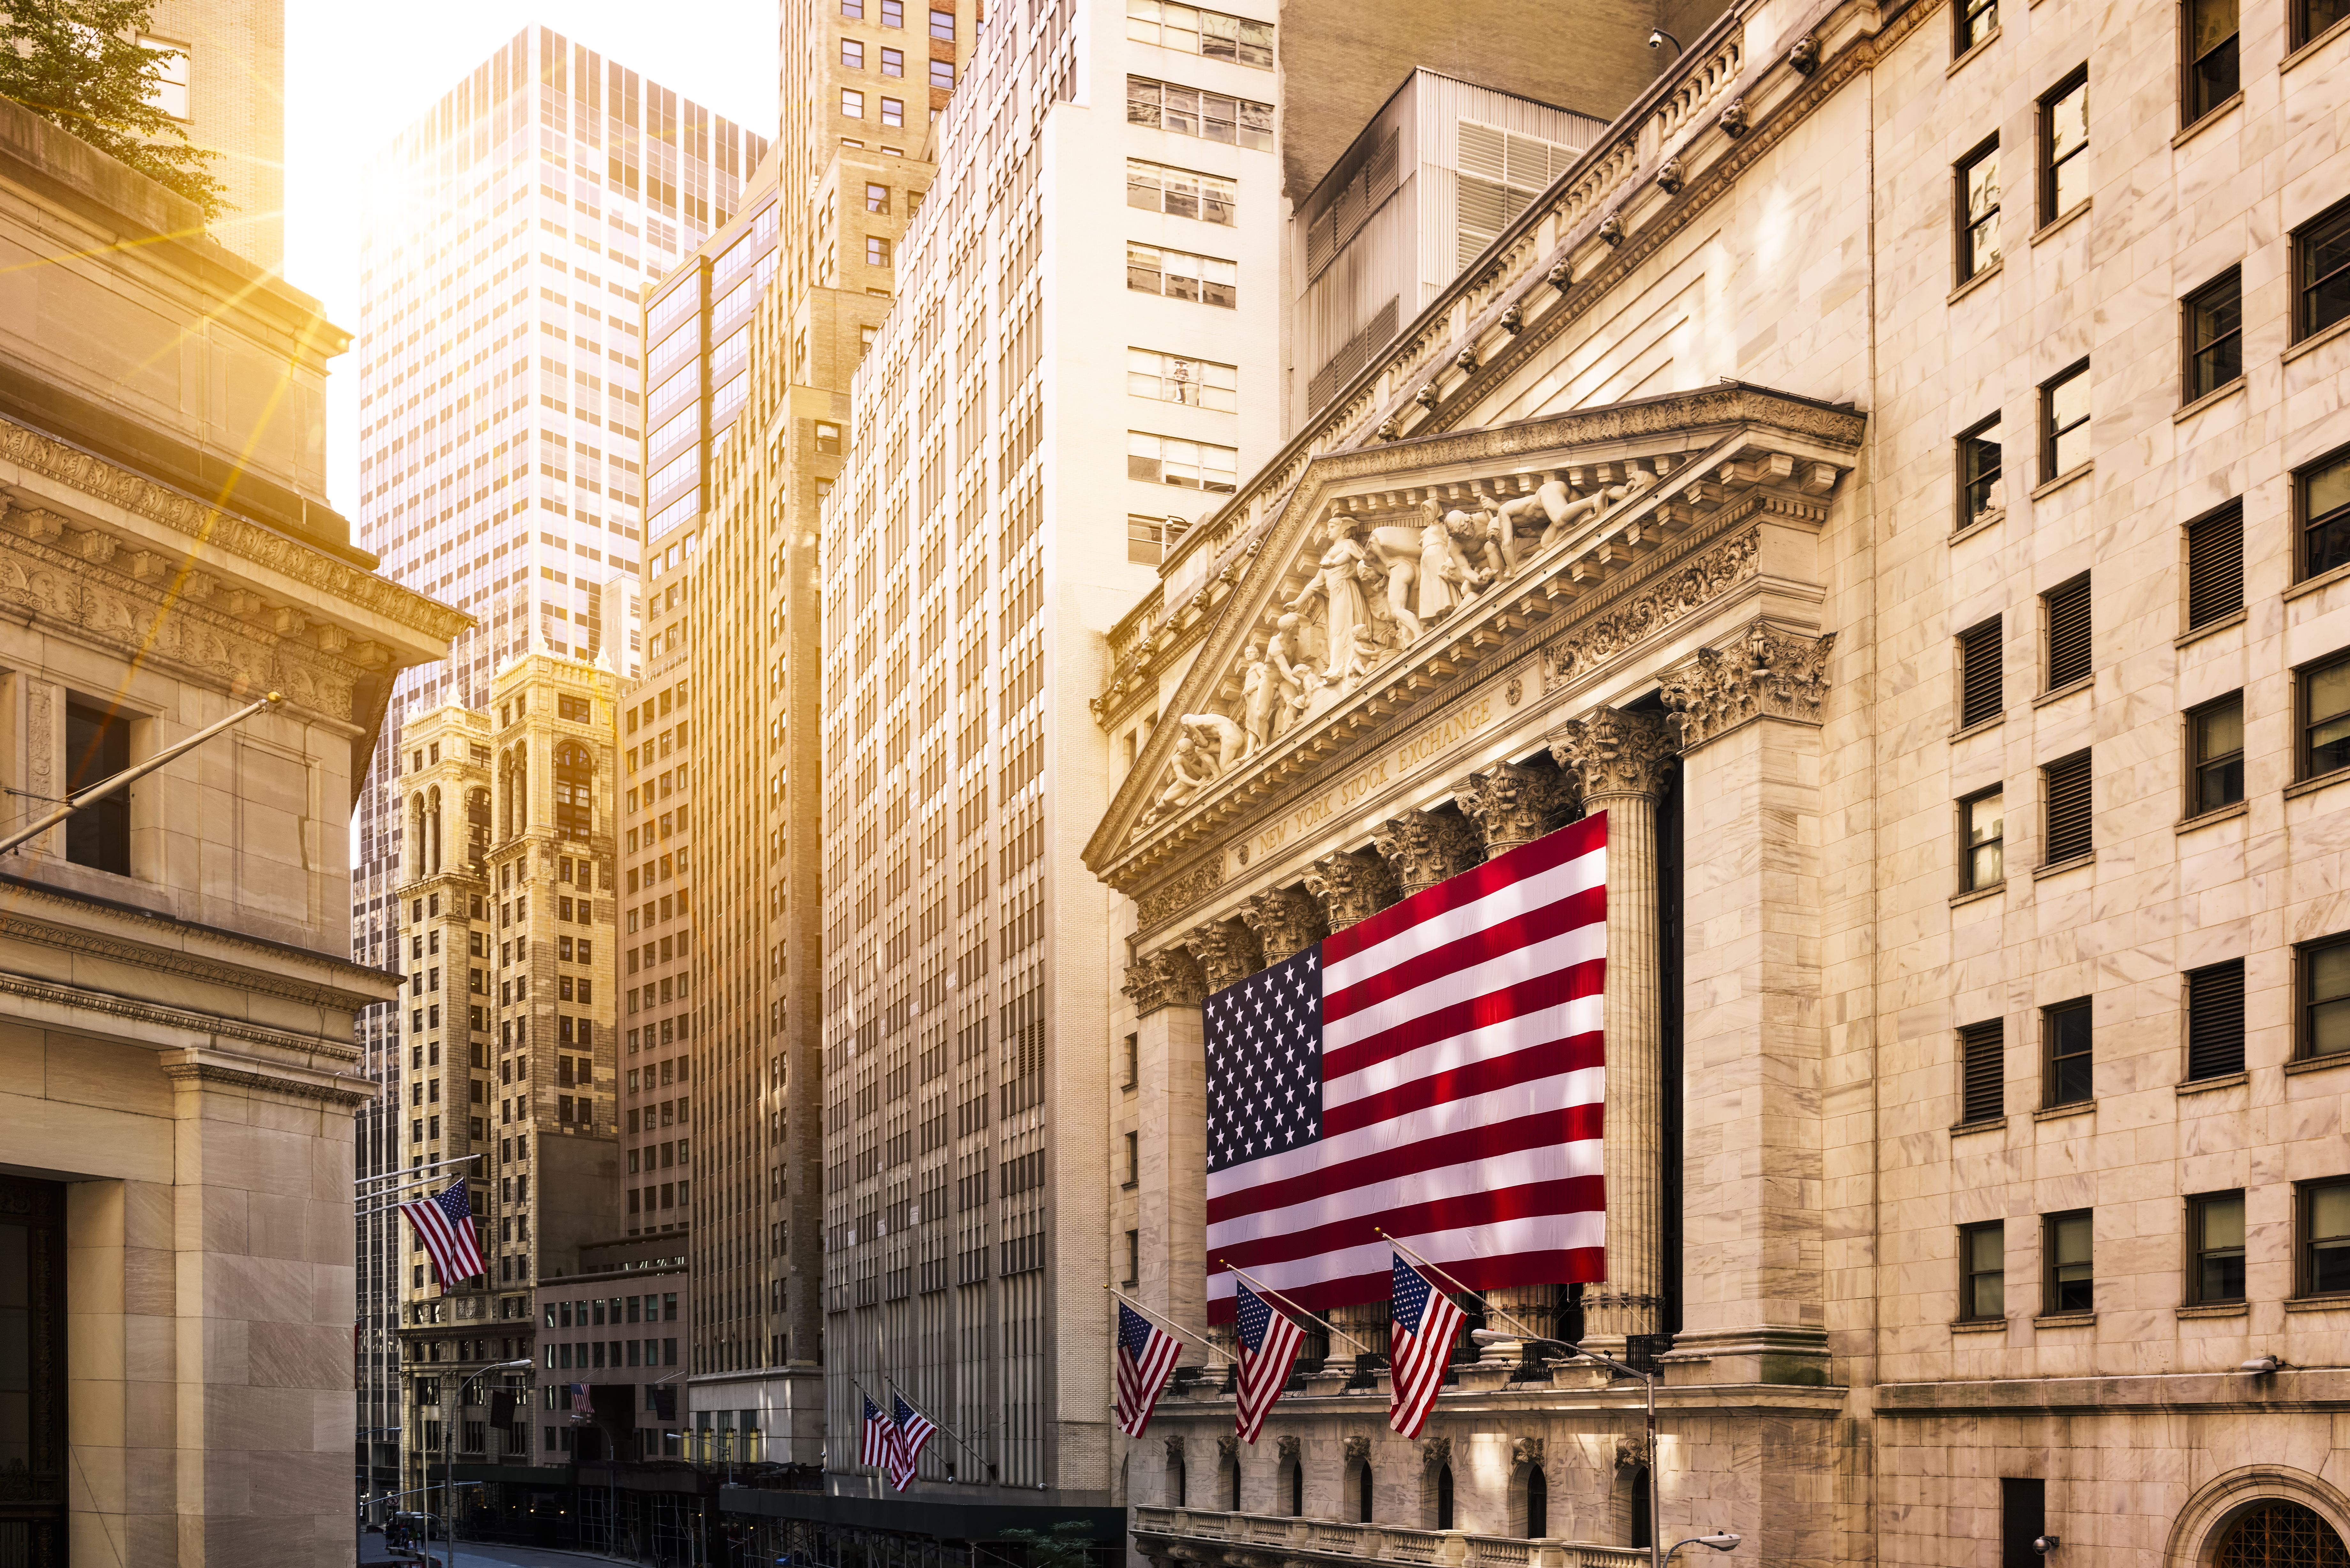 The New York Stock Exchange. Image courtesy of ventdusud/Shutterstock.com.